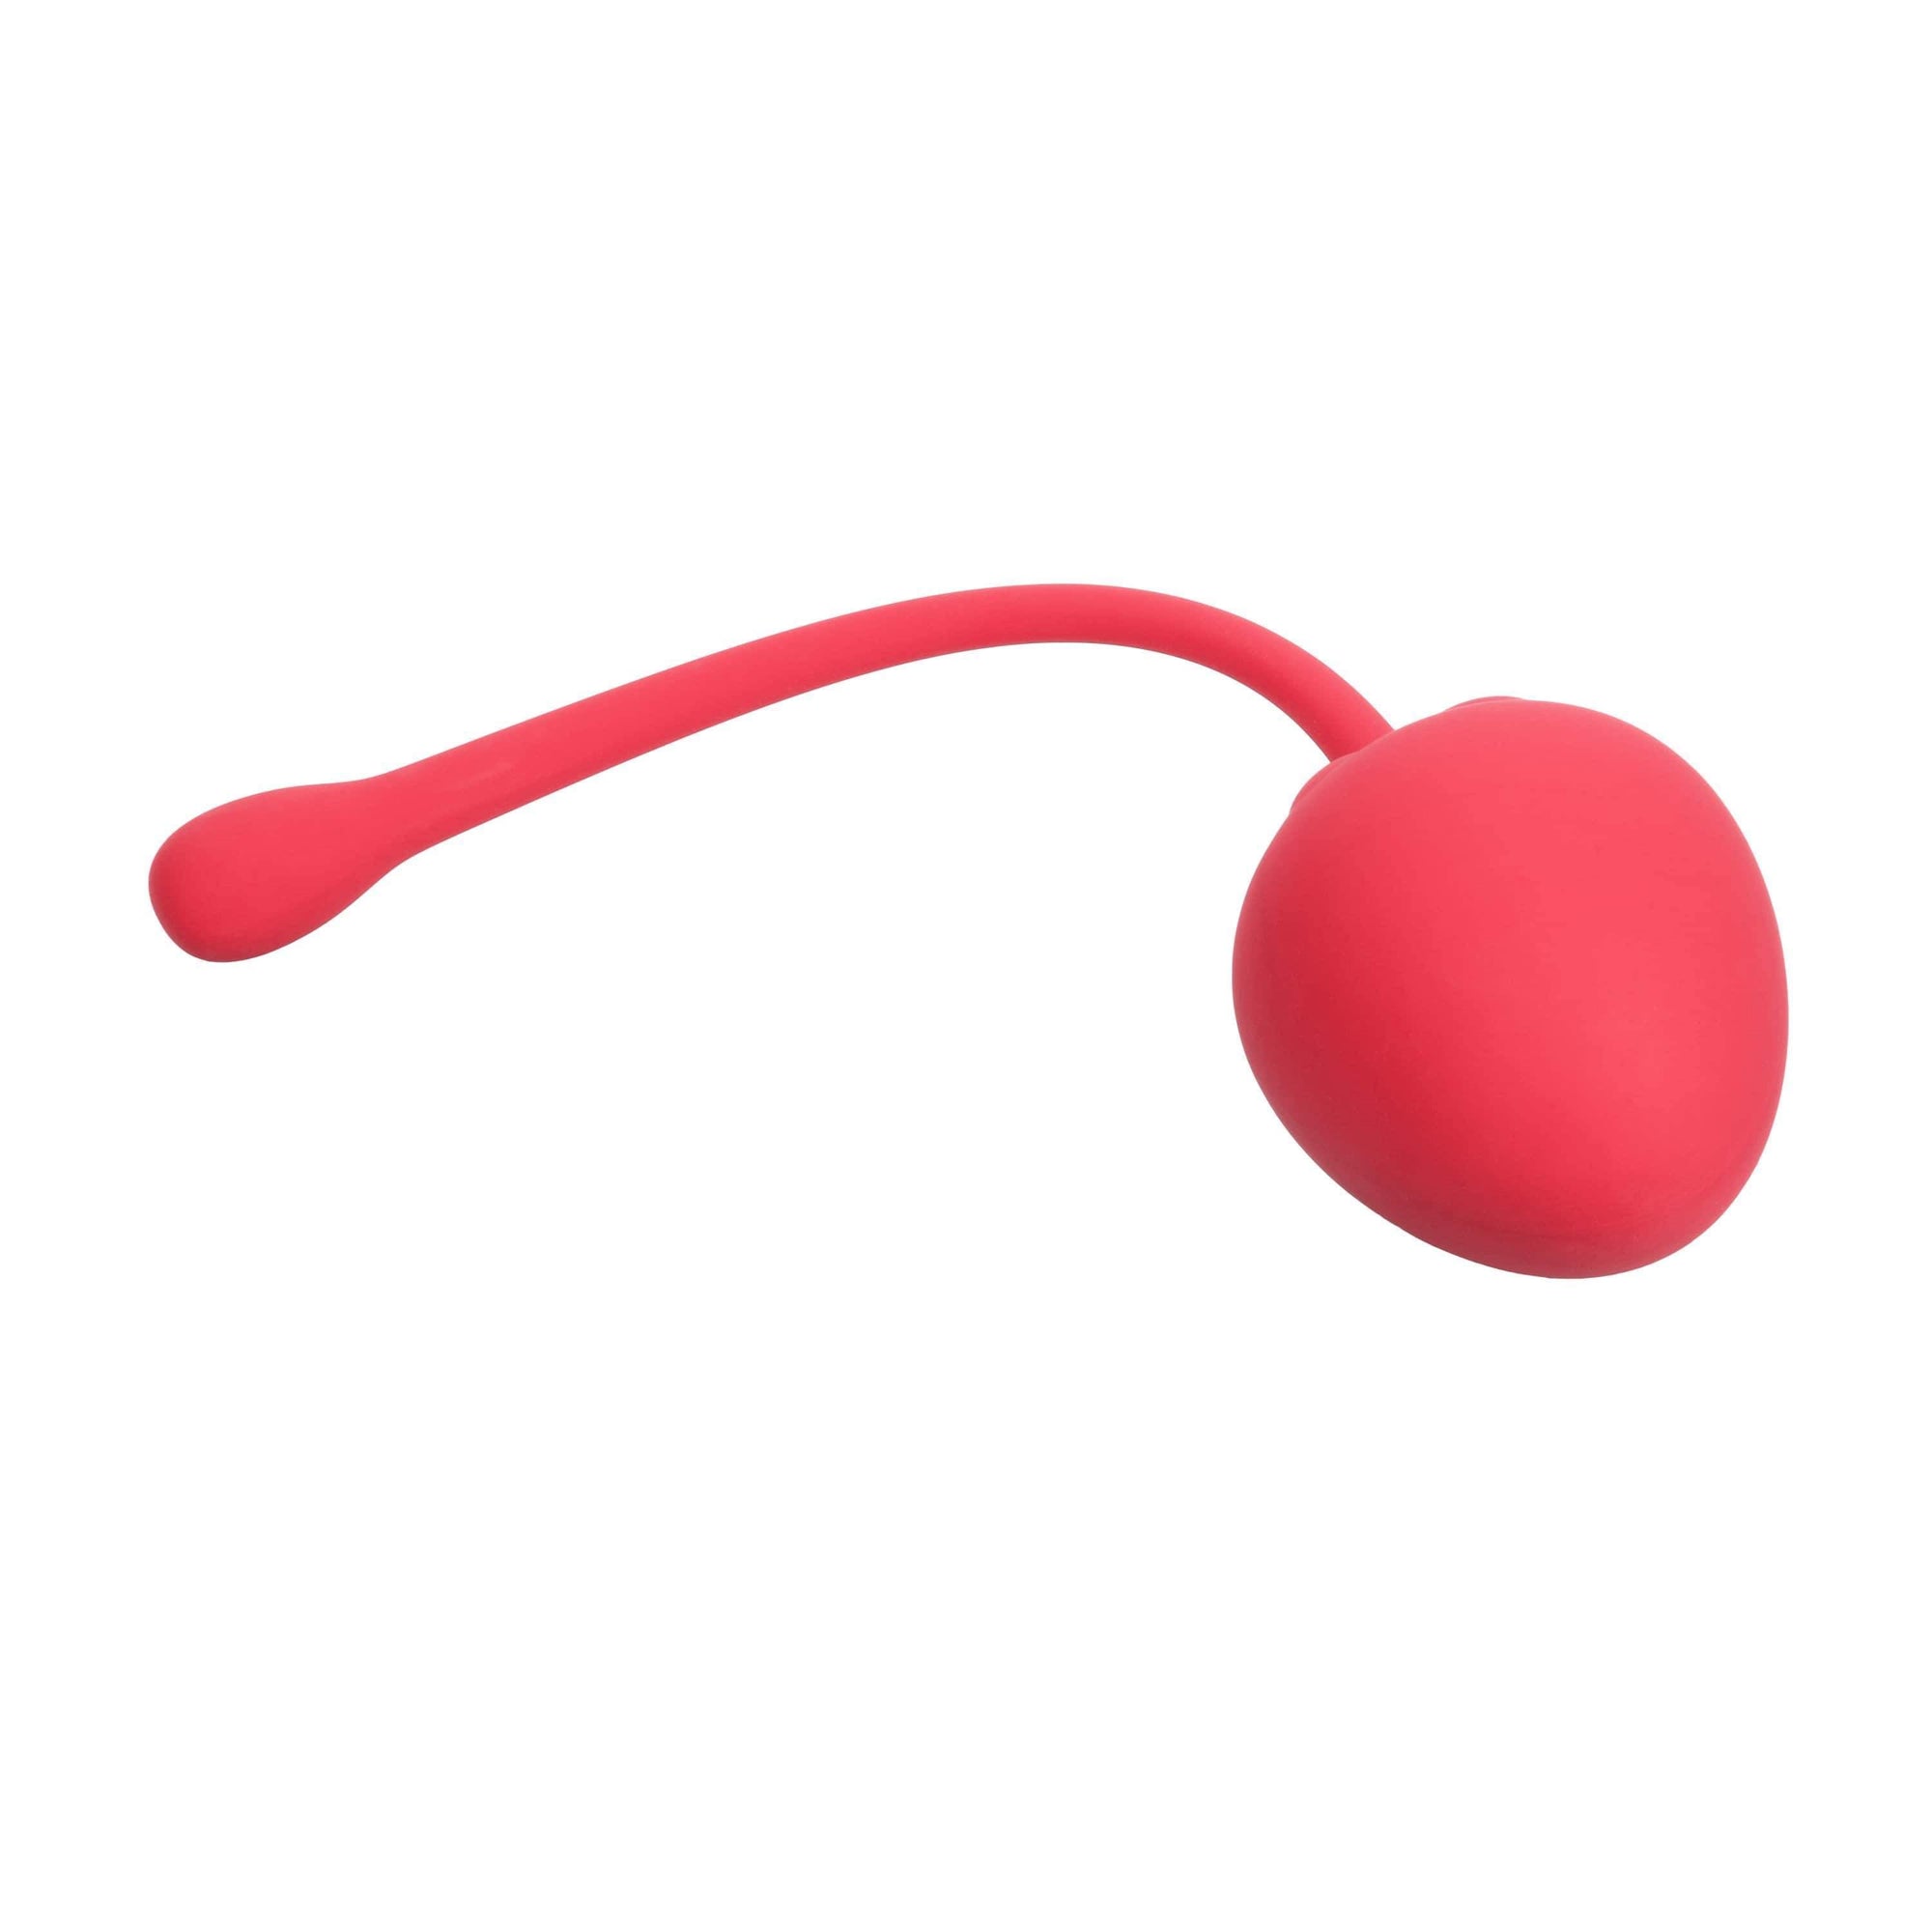 California Exotics - Strawberry Silicone Kegel Balls Training Set (Pink) Kegel Balls (Non Vibration) 716770092427 CherryAffairs